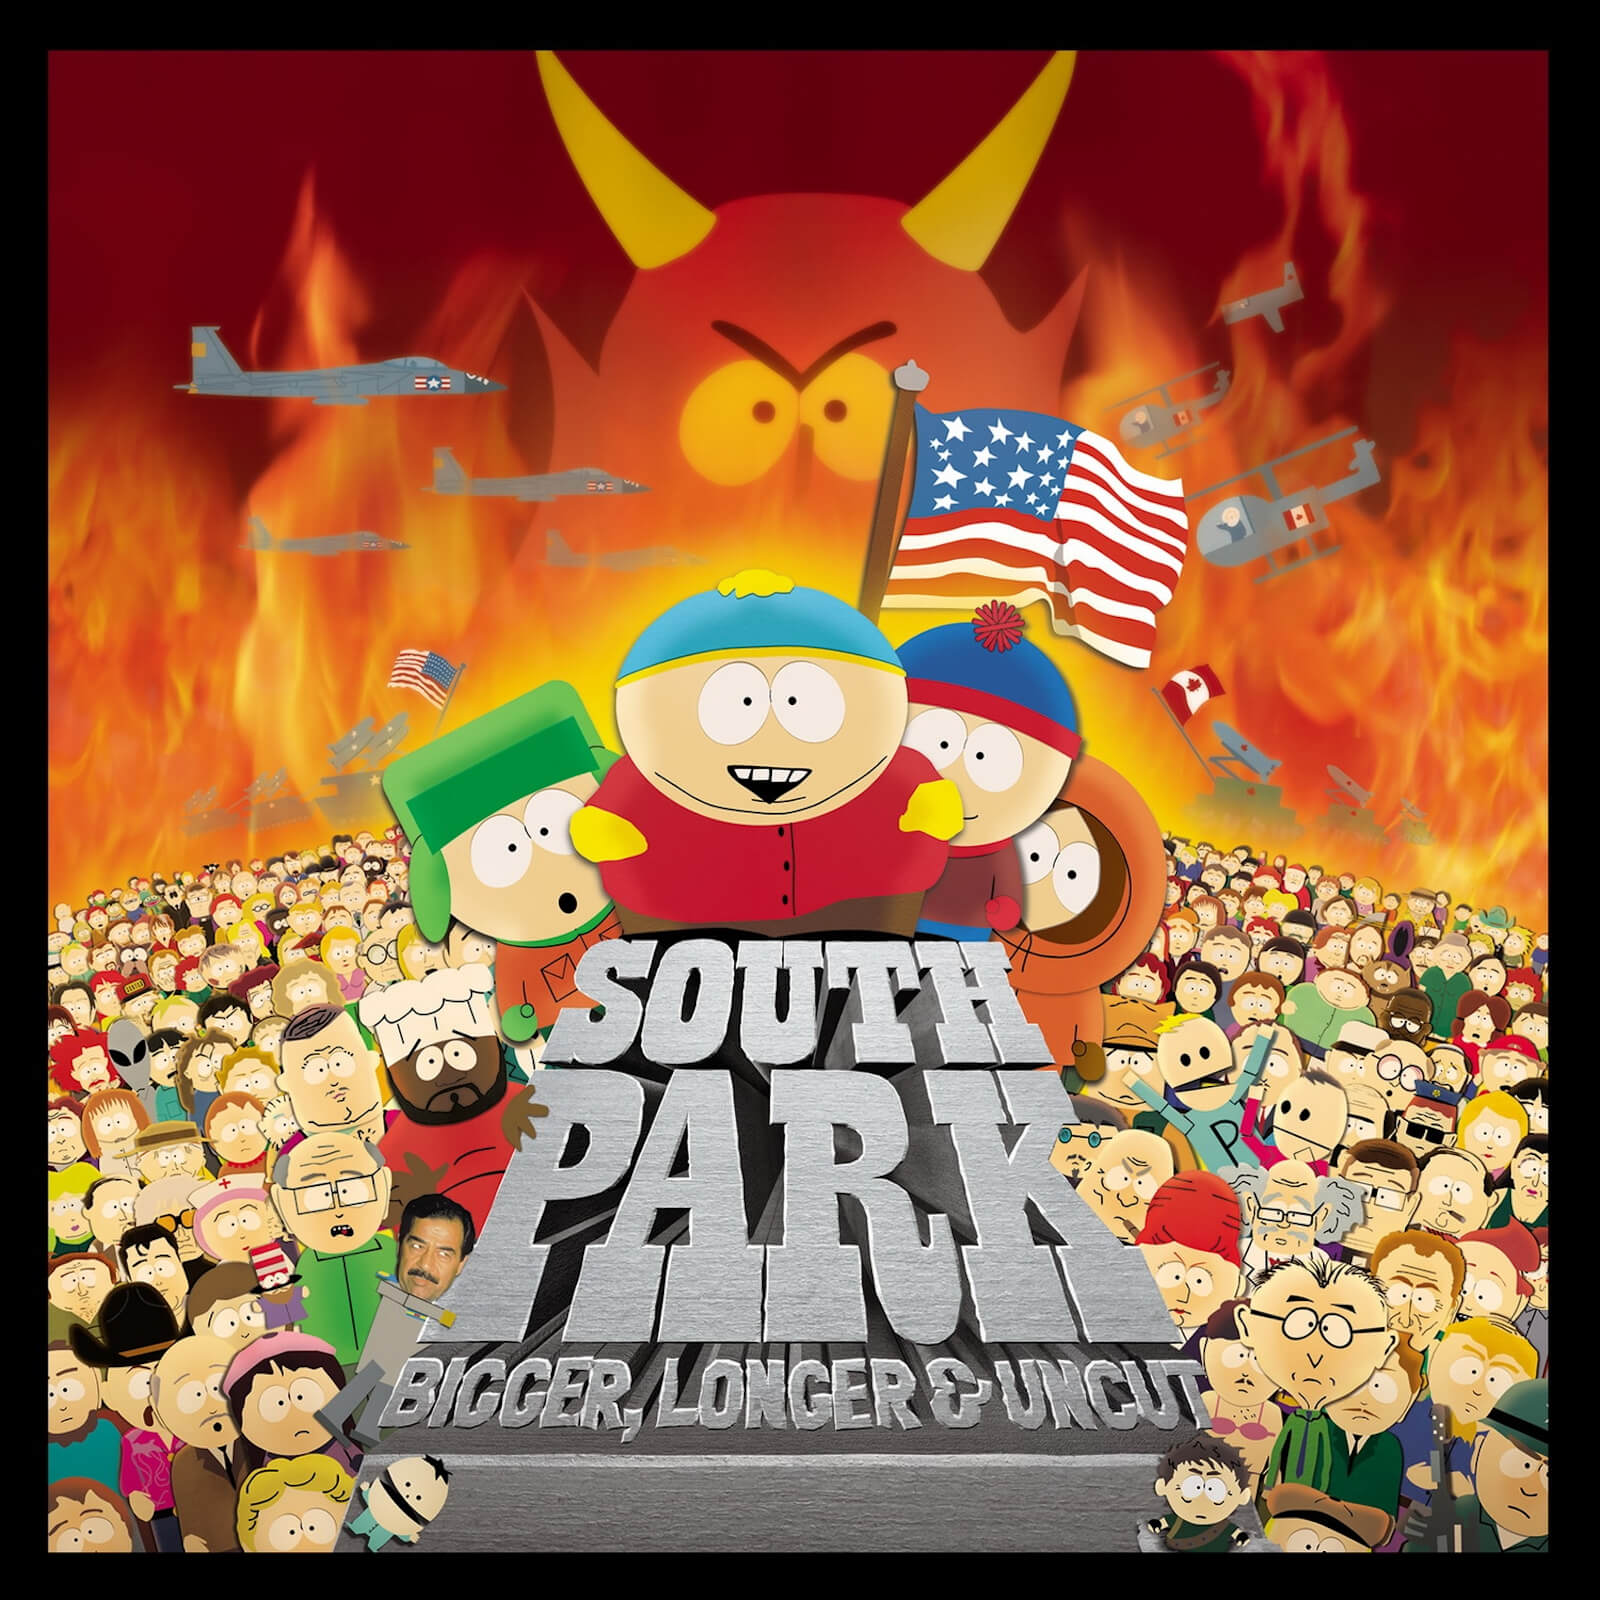 Warner Music Group South Park: Bigger, Longer & Uncut Vinyl Box Set